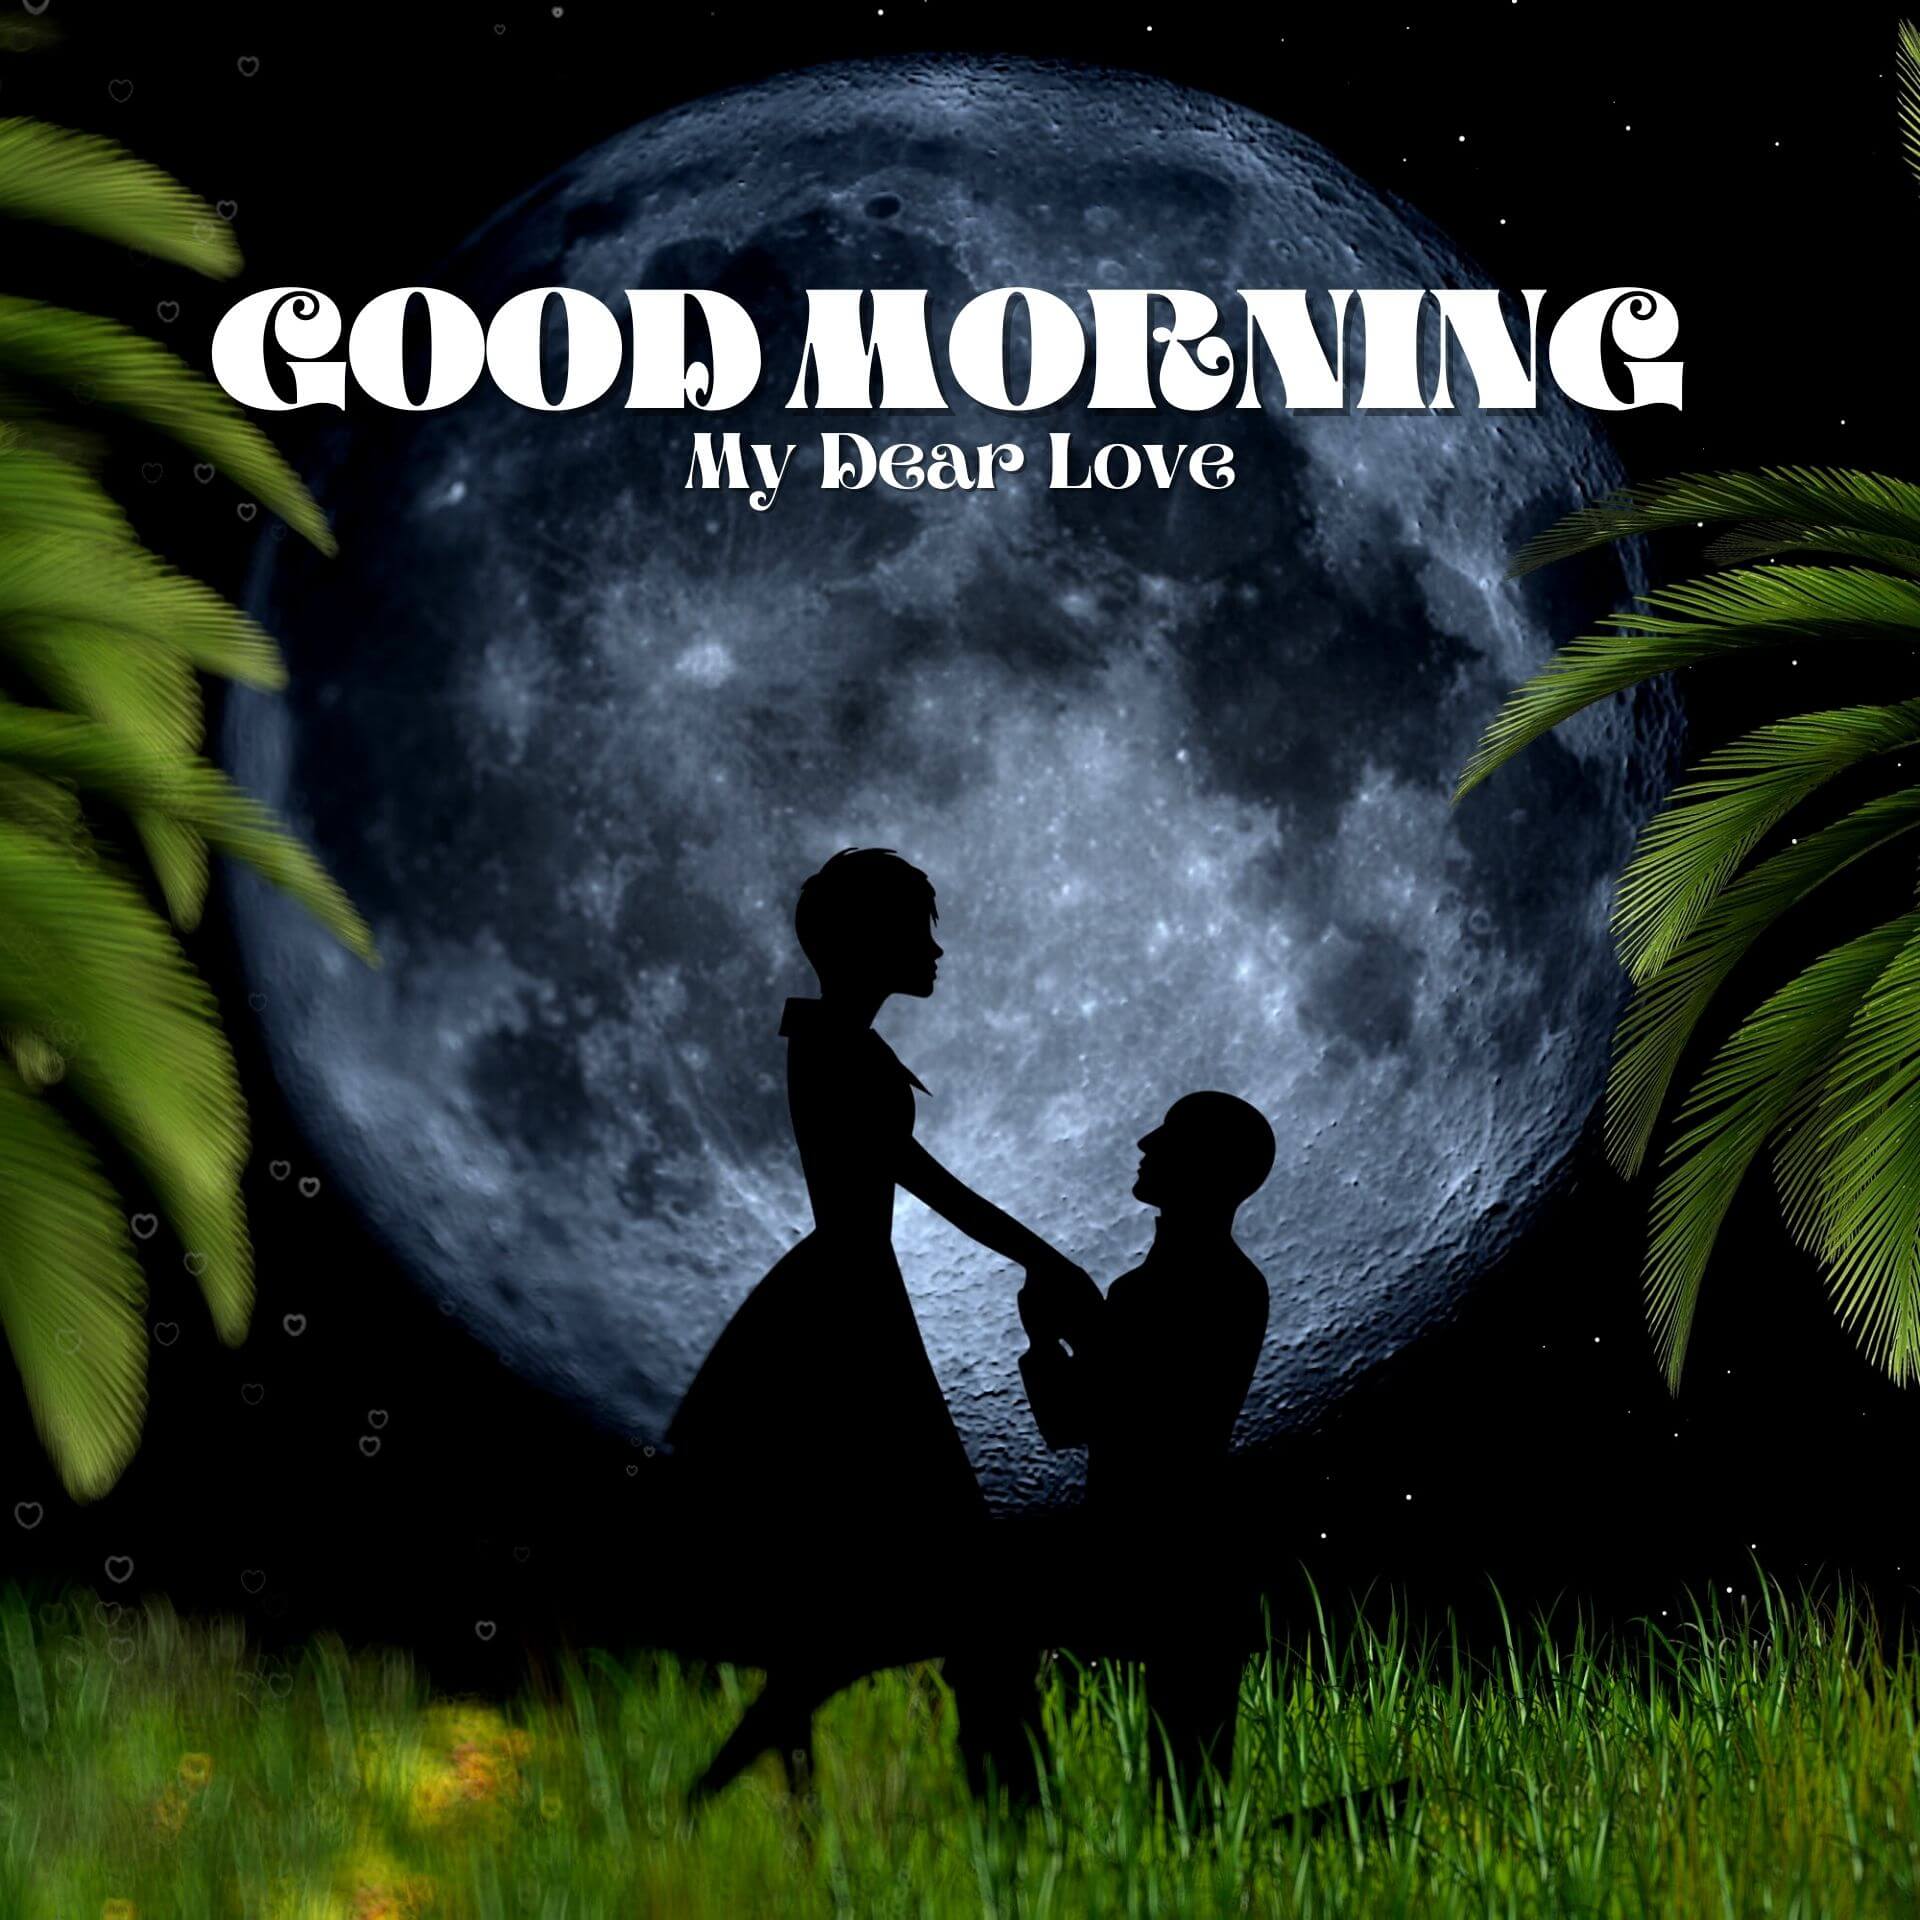 Romantic Good Morning Pics Download Free